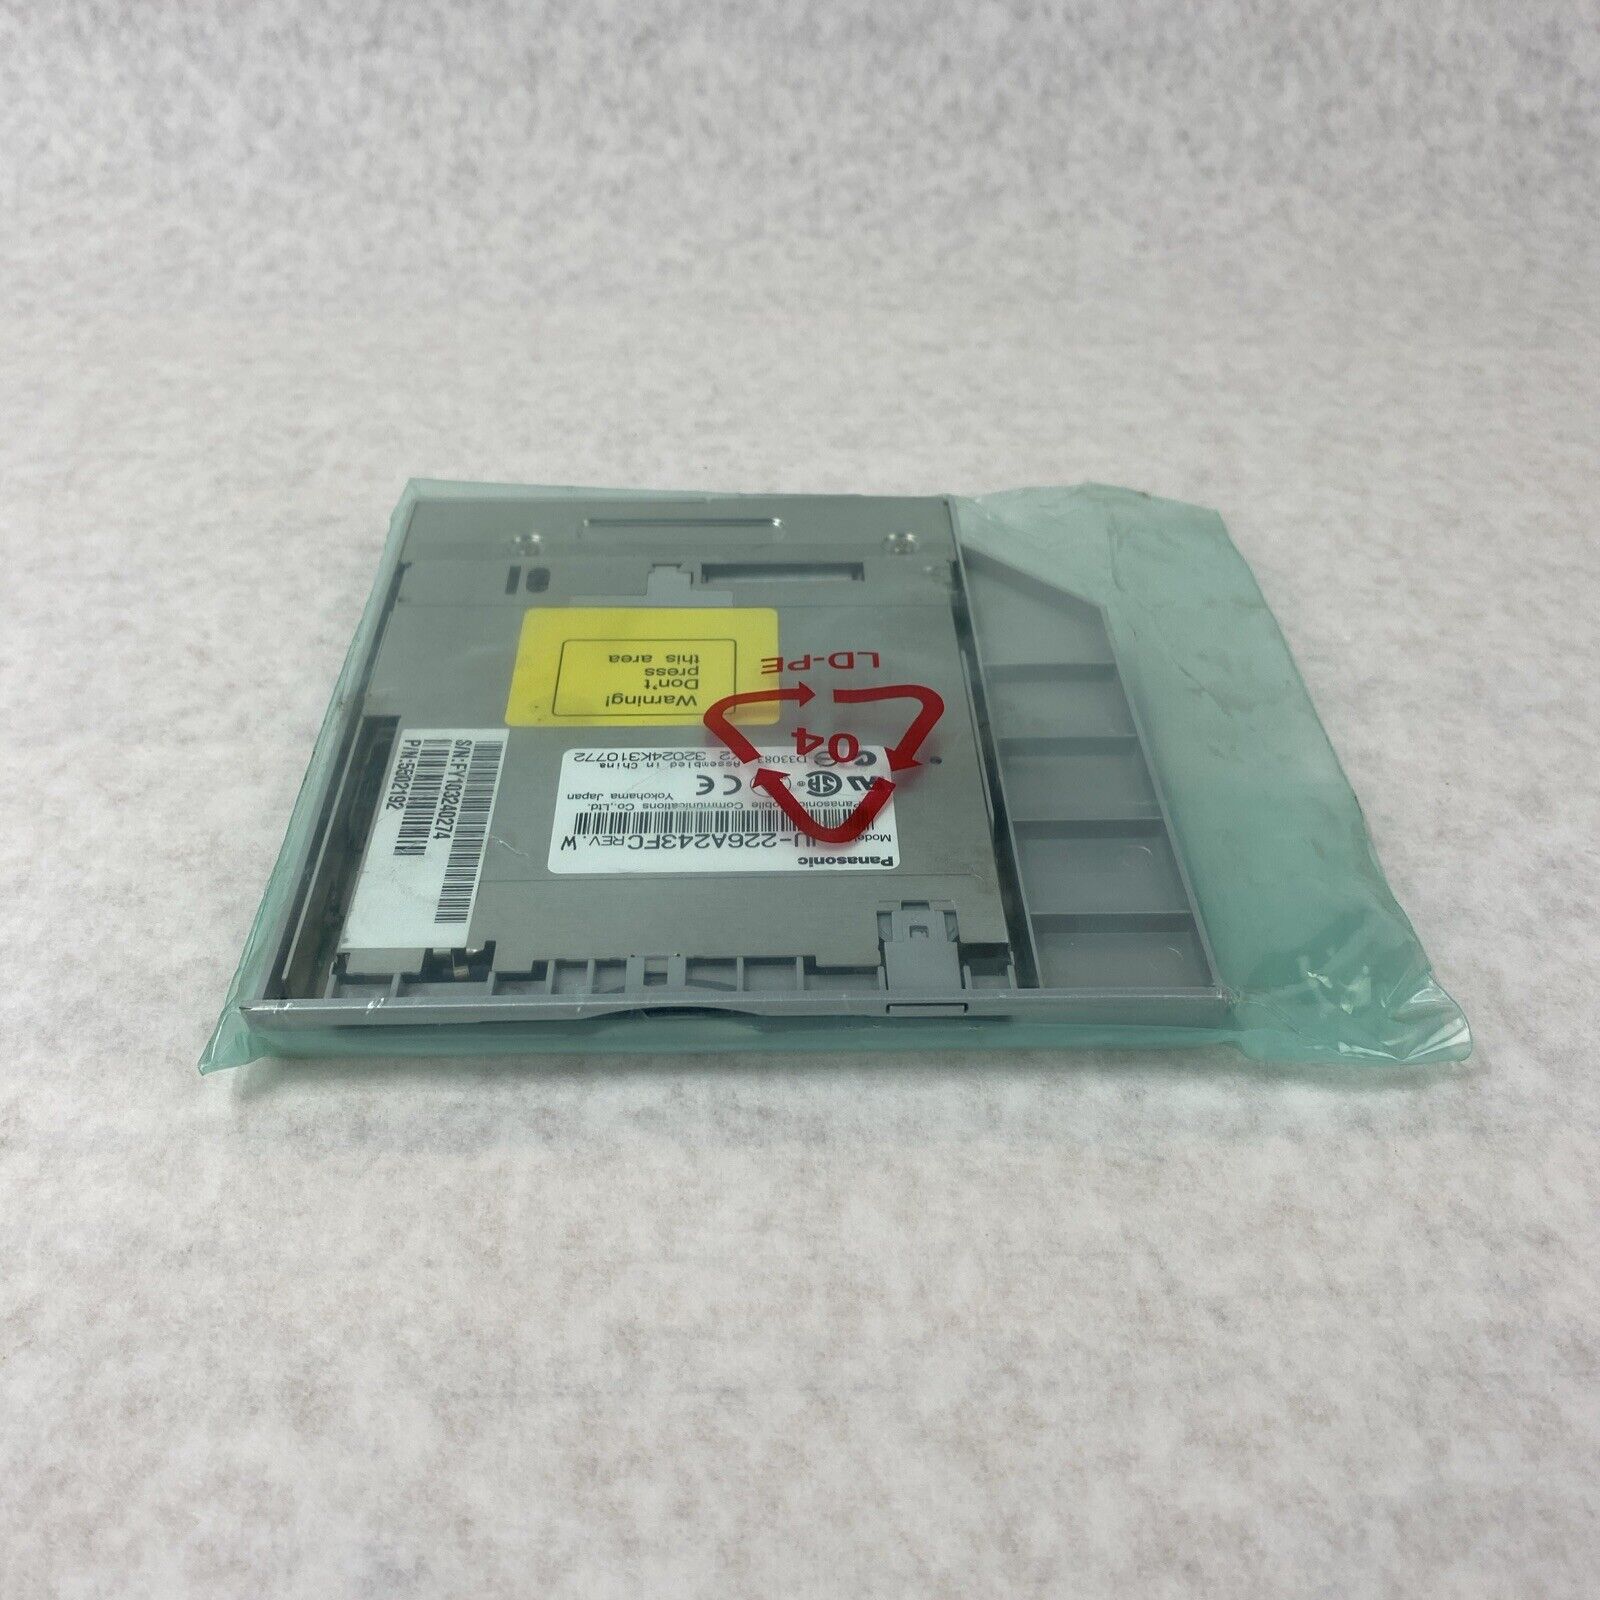 Panasonic 5502192 JU-226A243FC Internal 3.5" Floppy Disk Drive